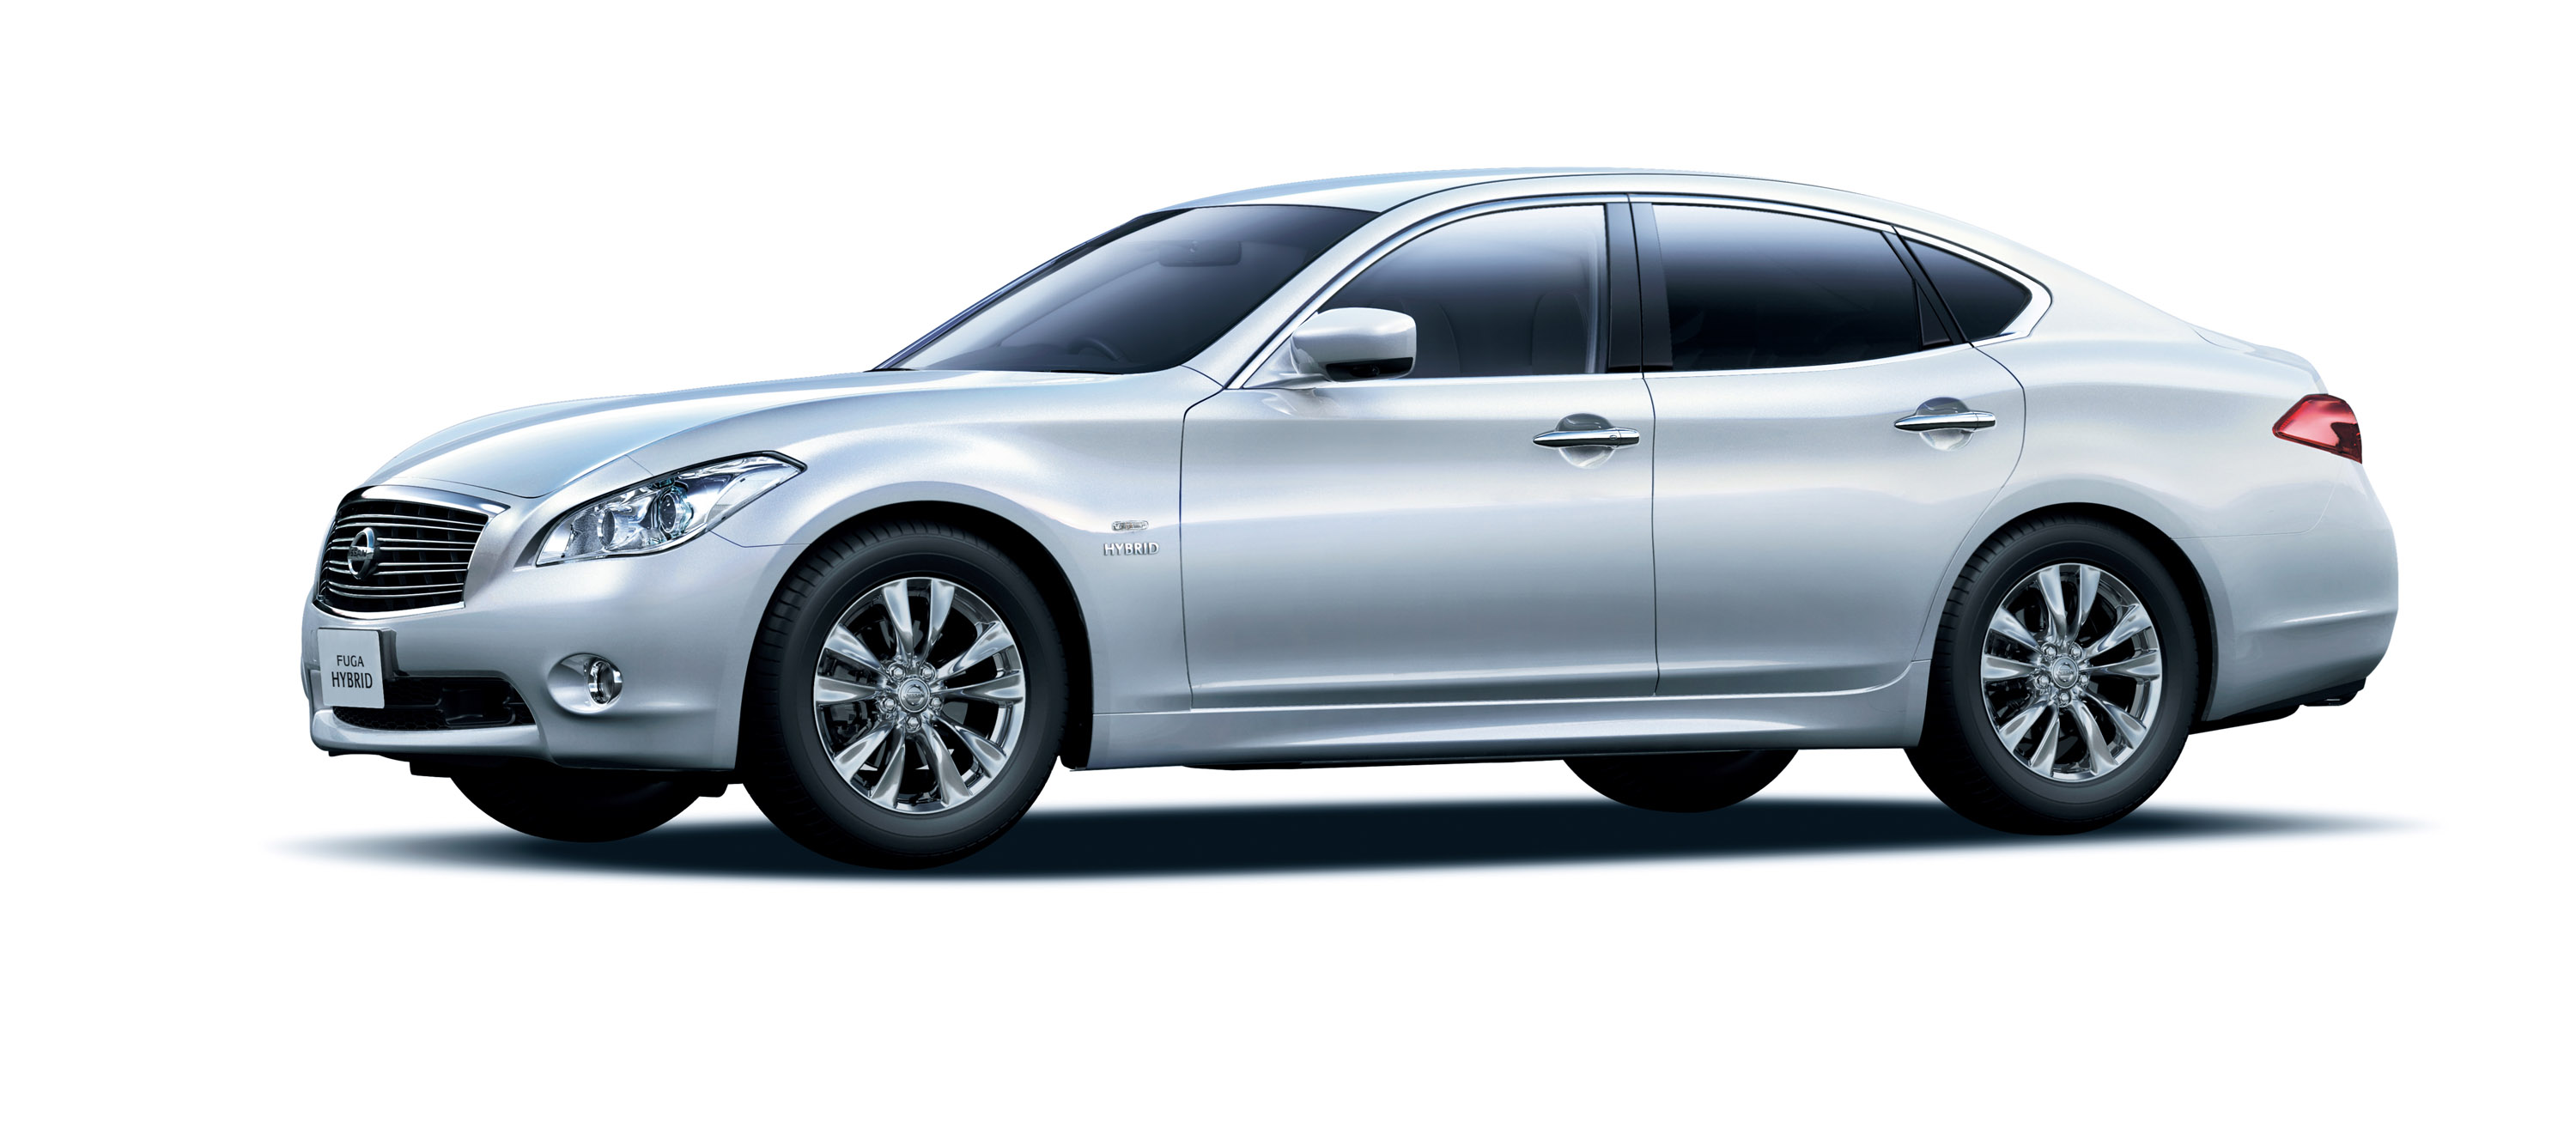 Nissan fuga hybrid review #8